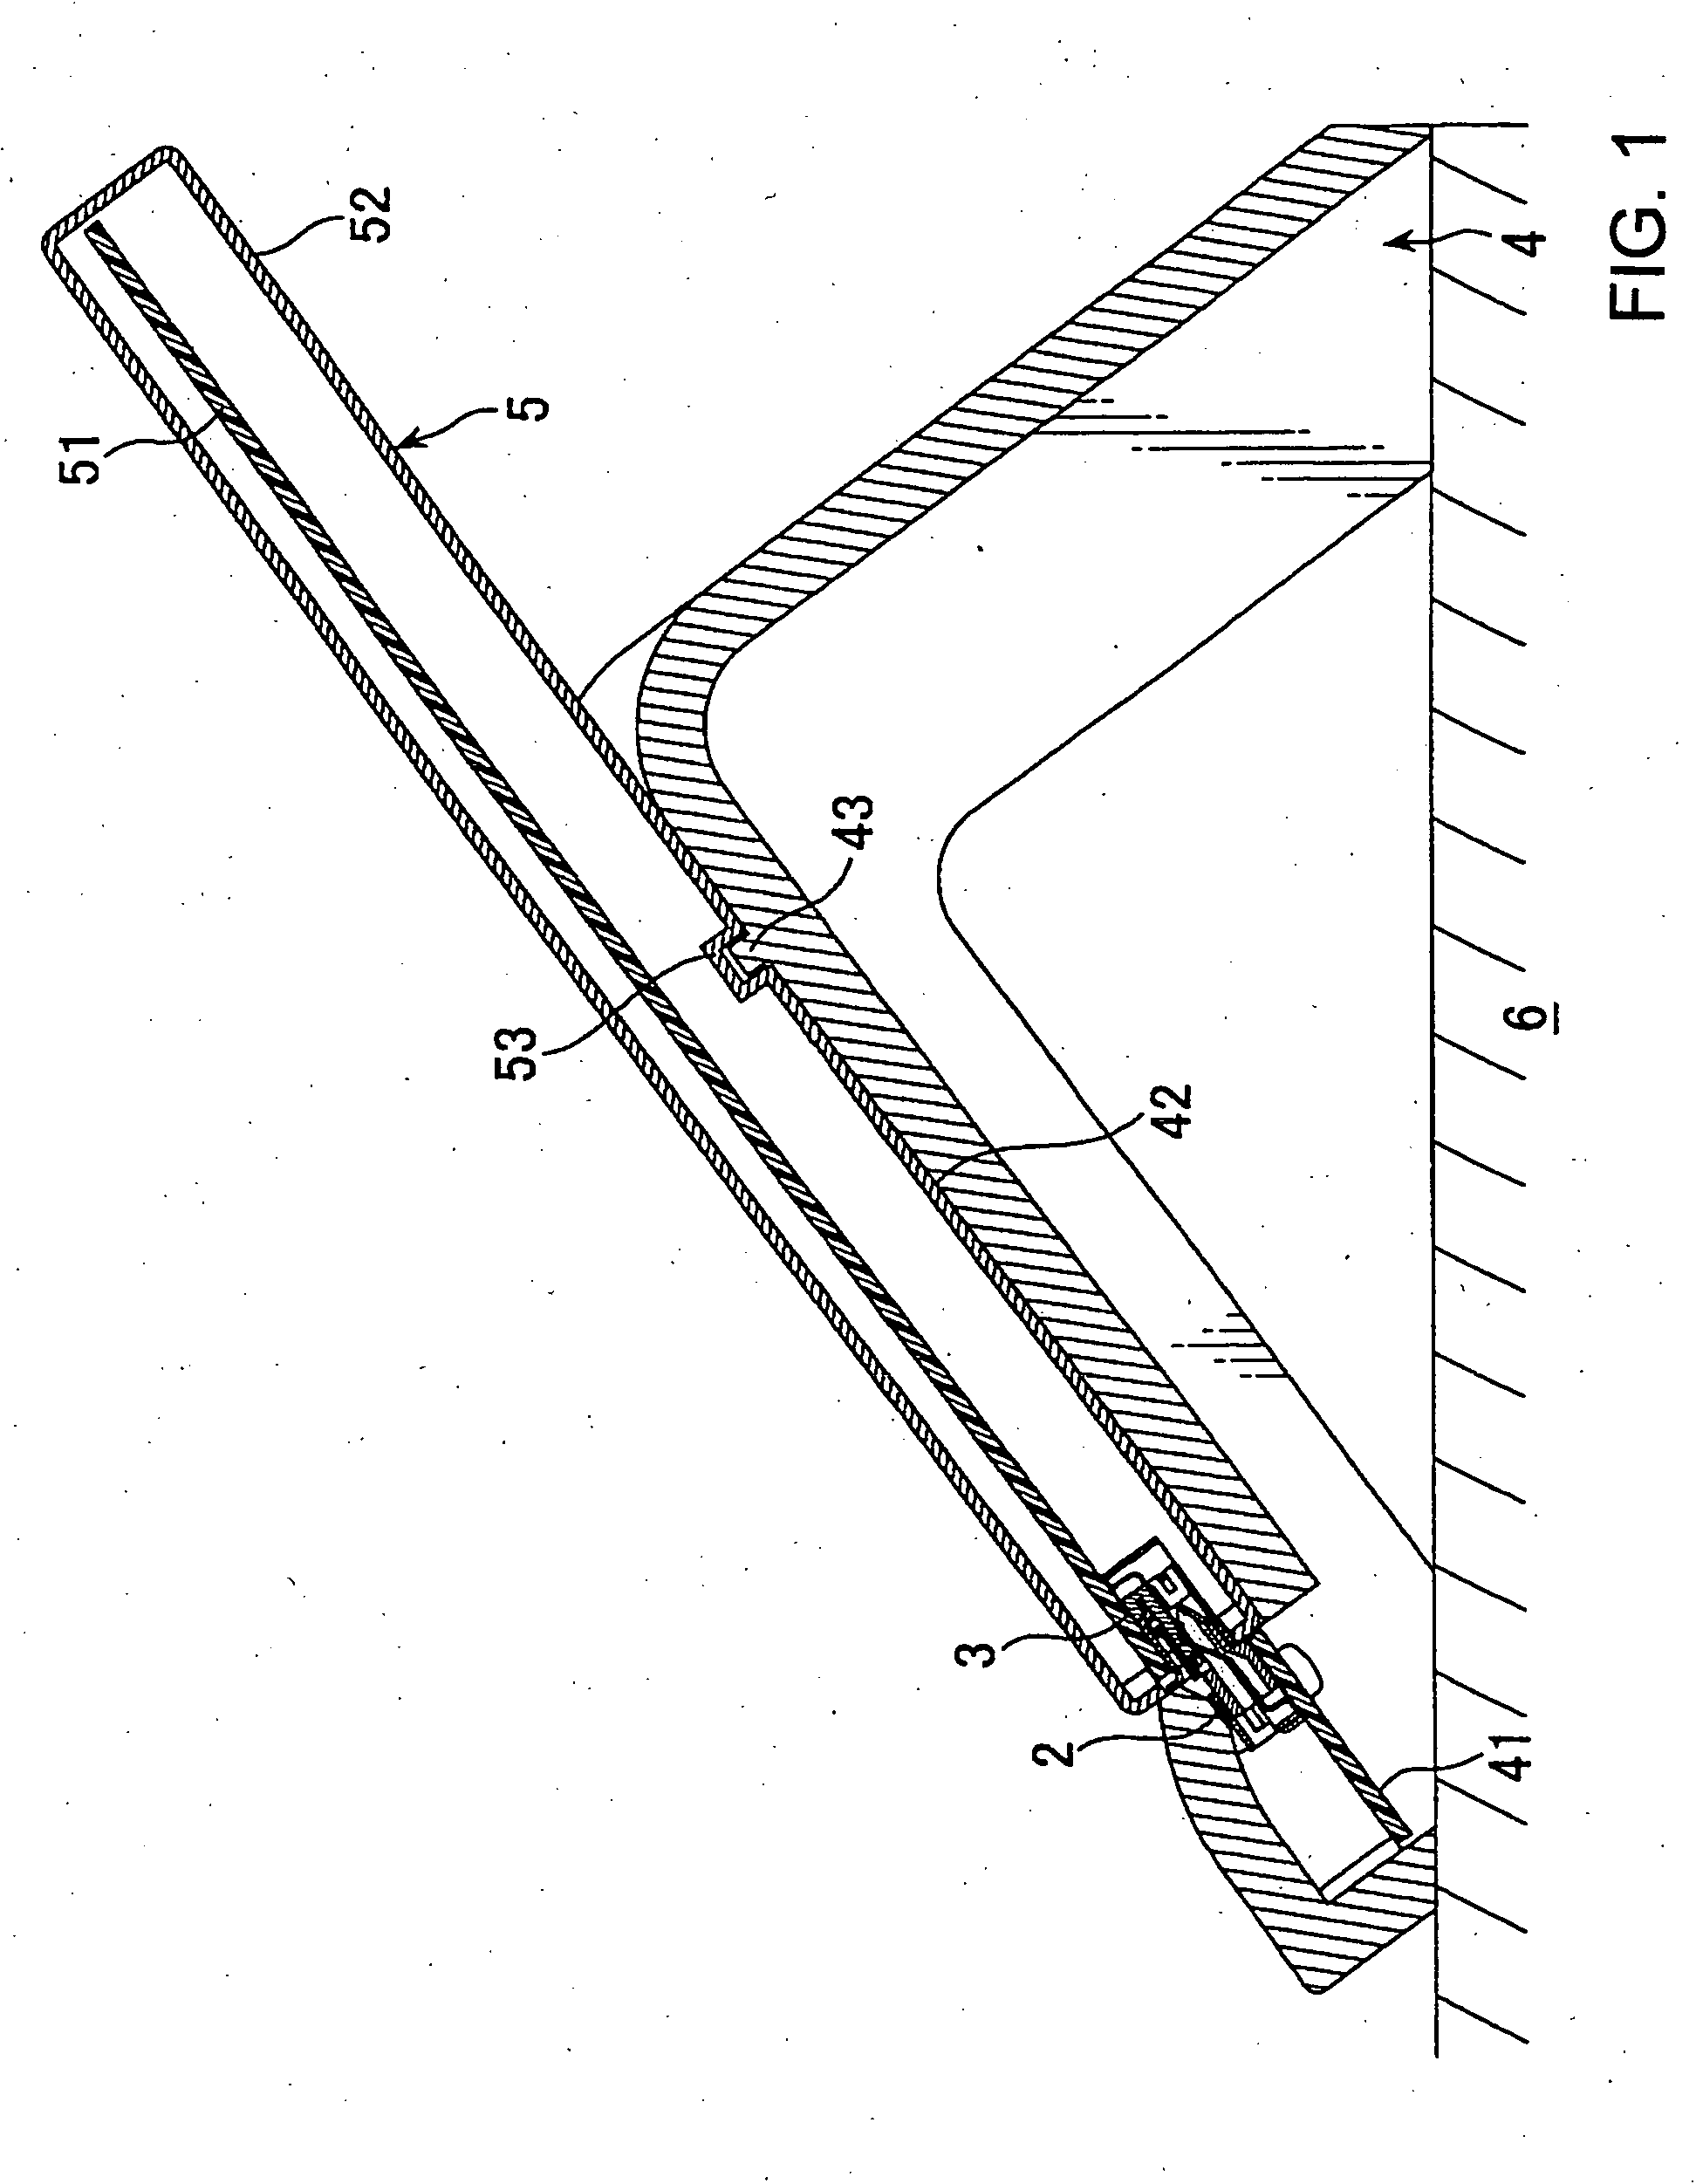 Electrical connector apparatus